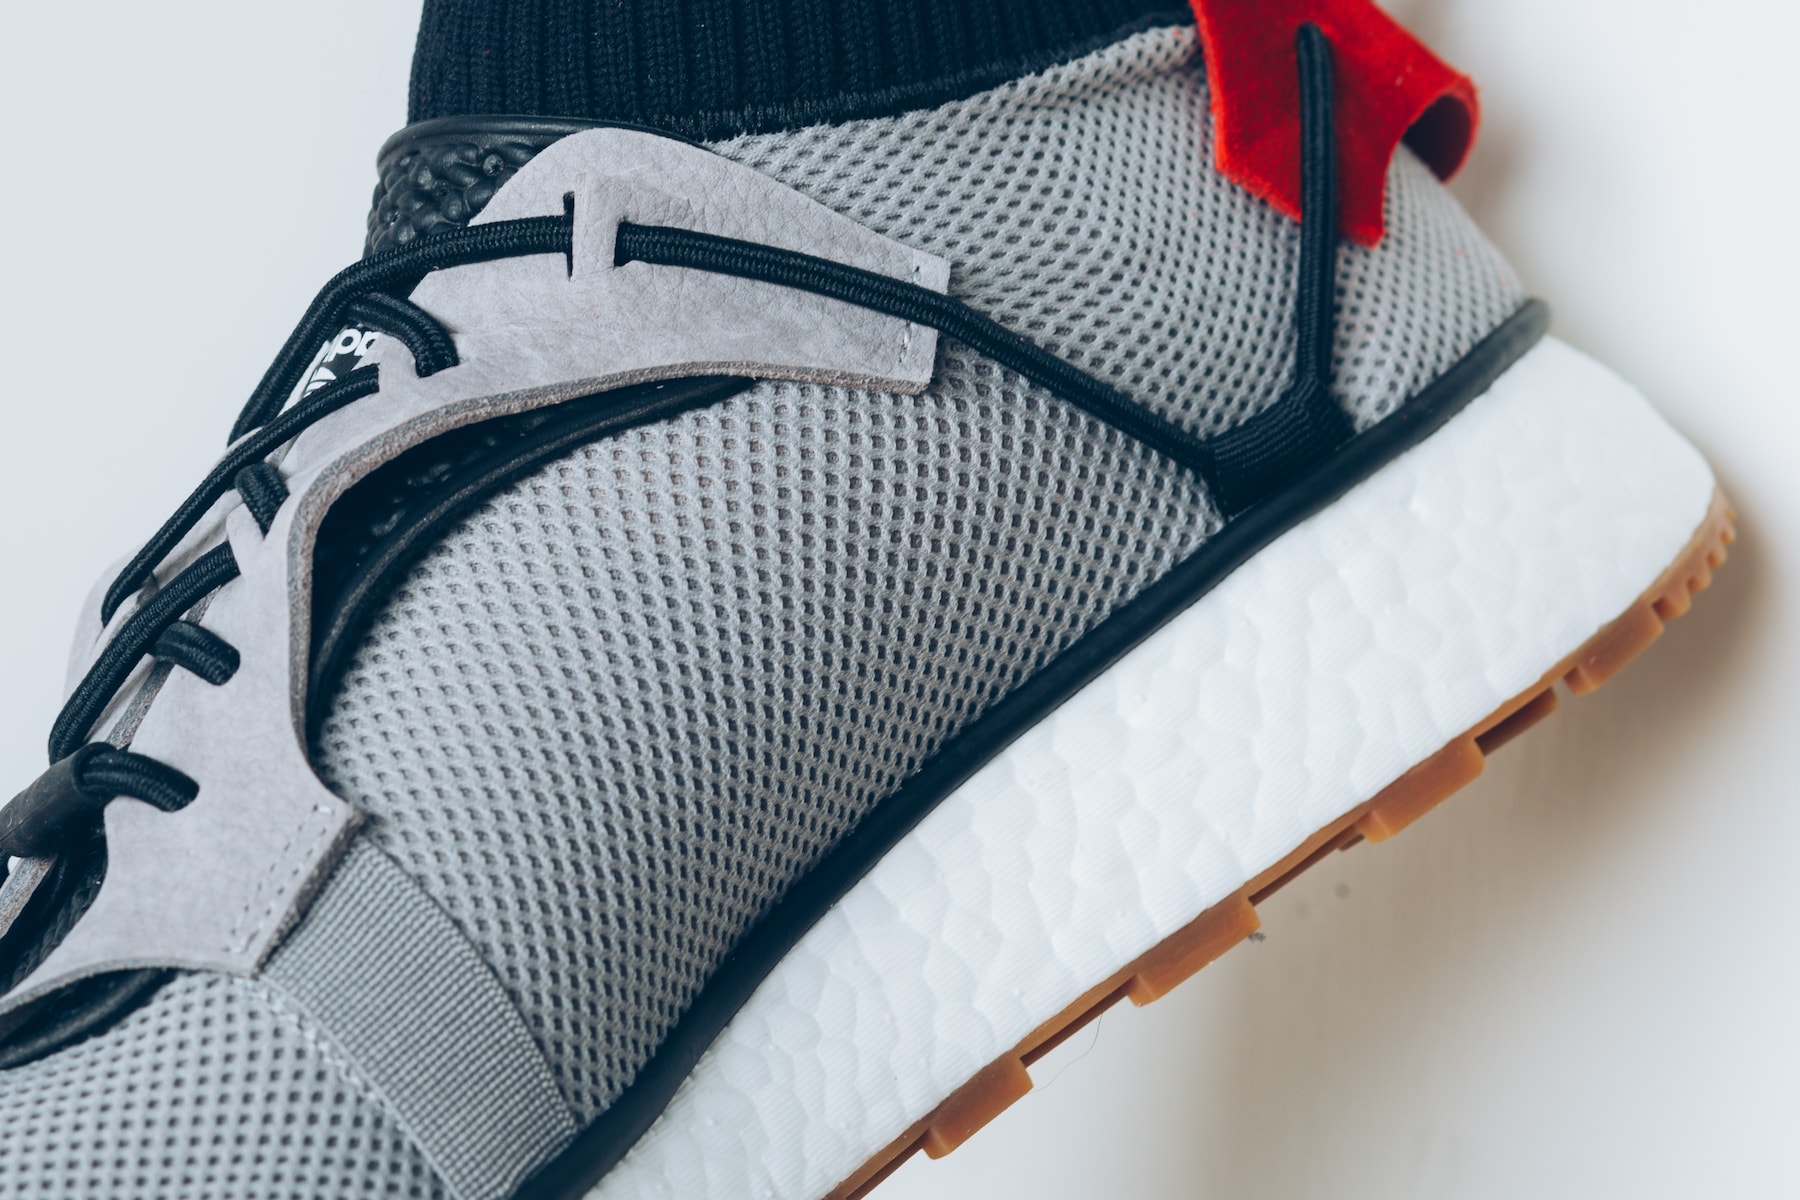 adidas Originals by Alexander Wang Drop 3.2 RUN Closer Look